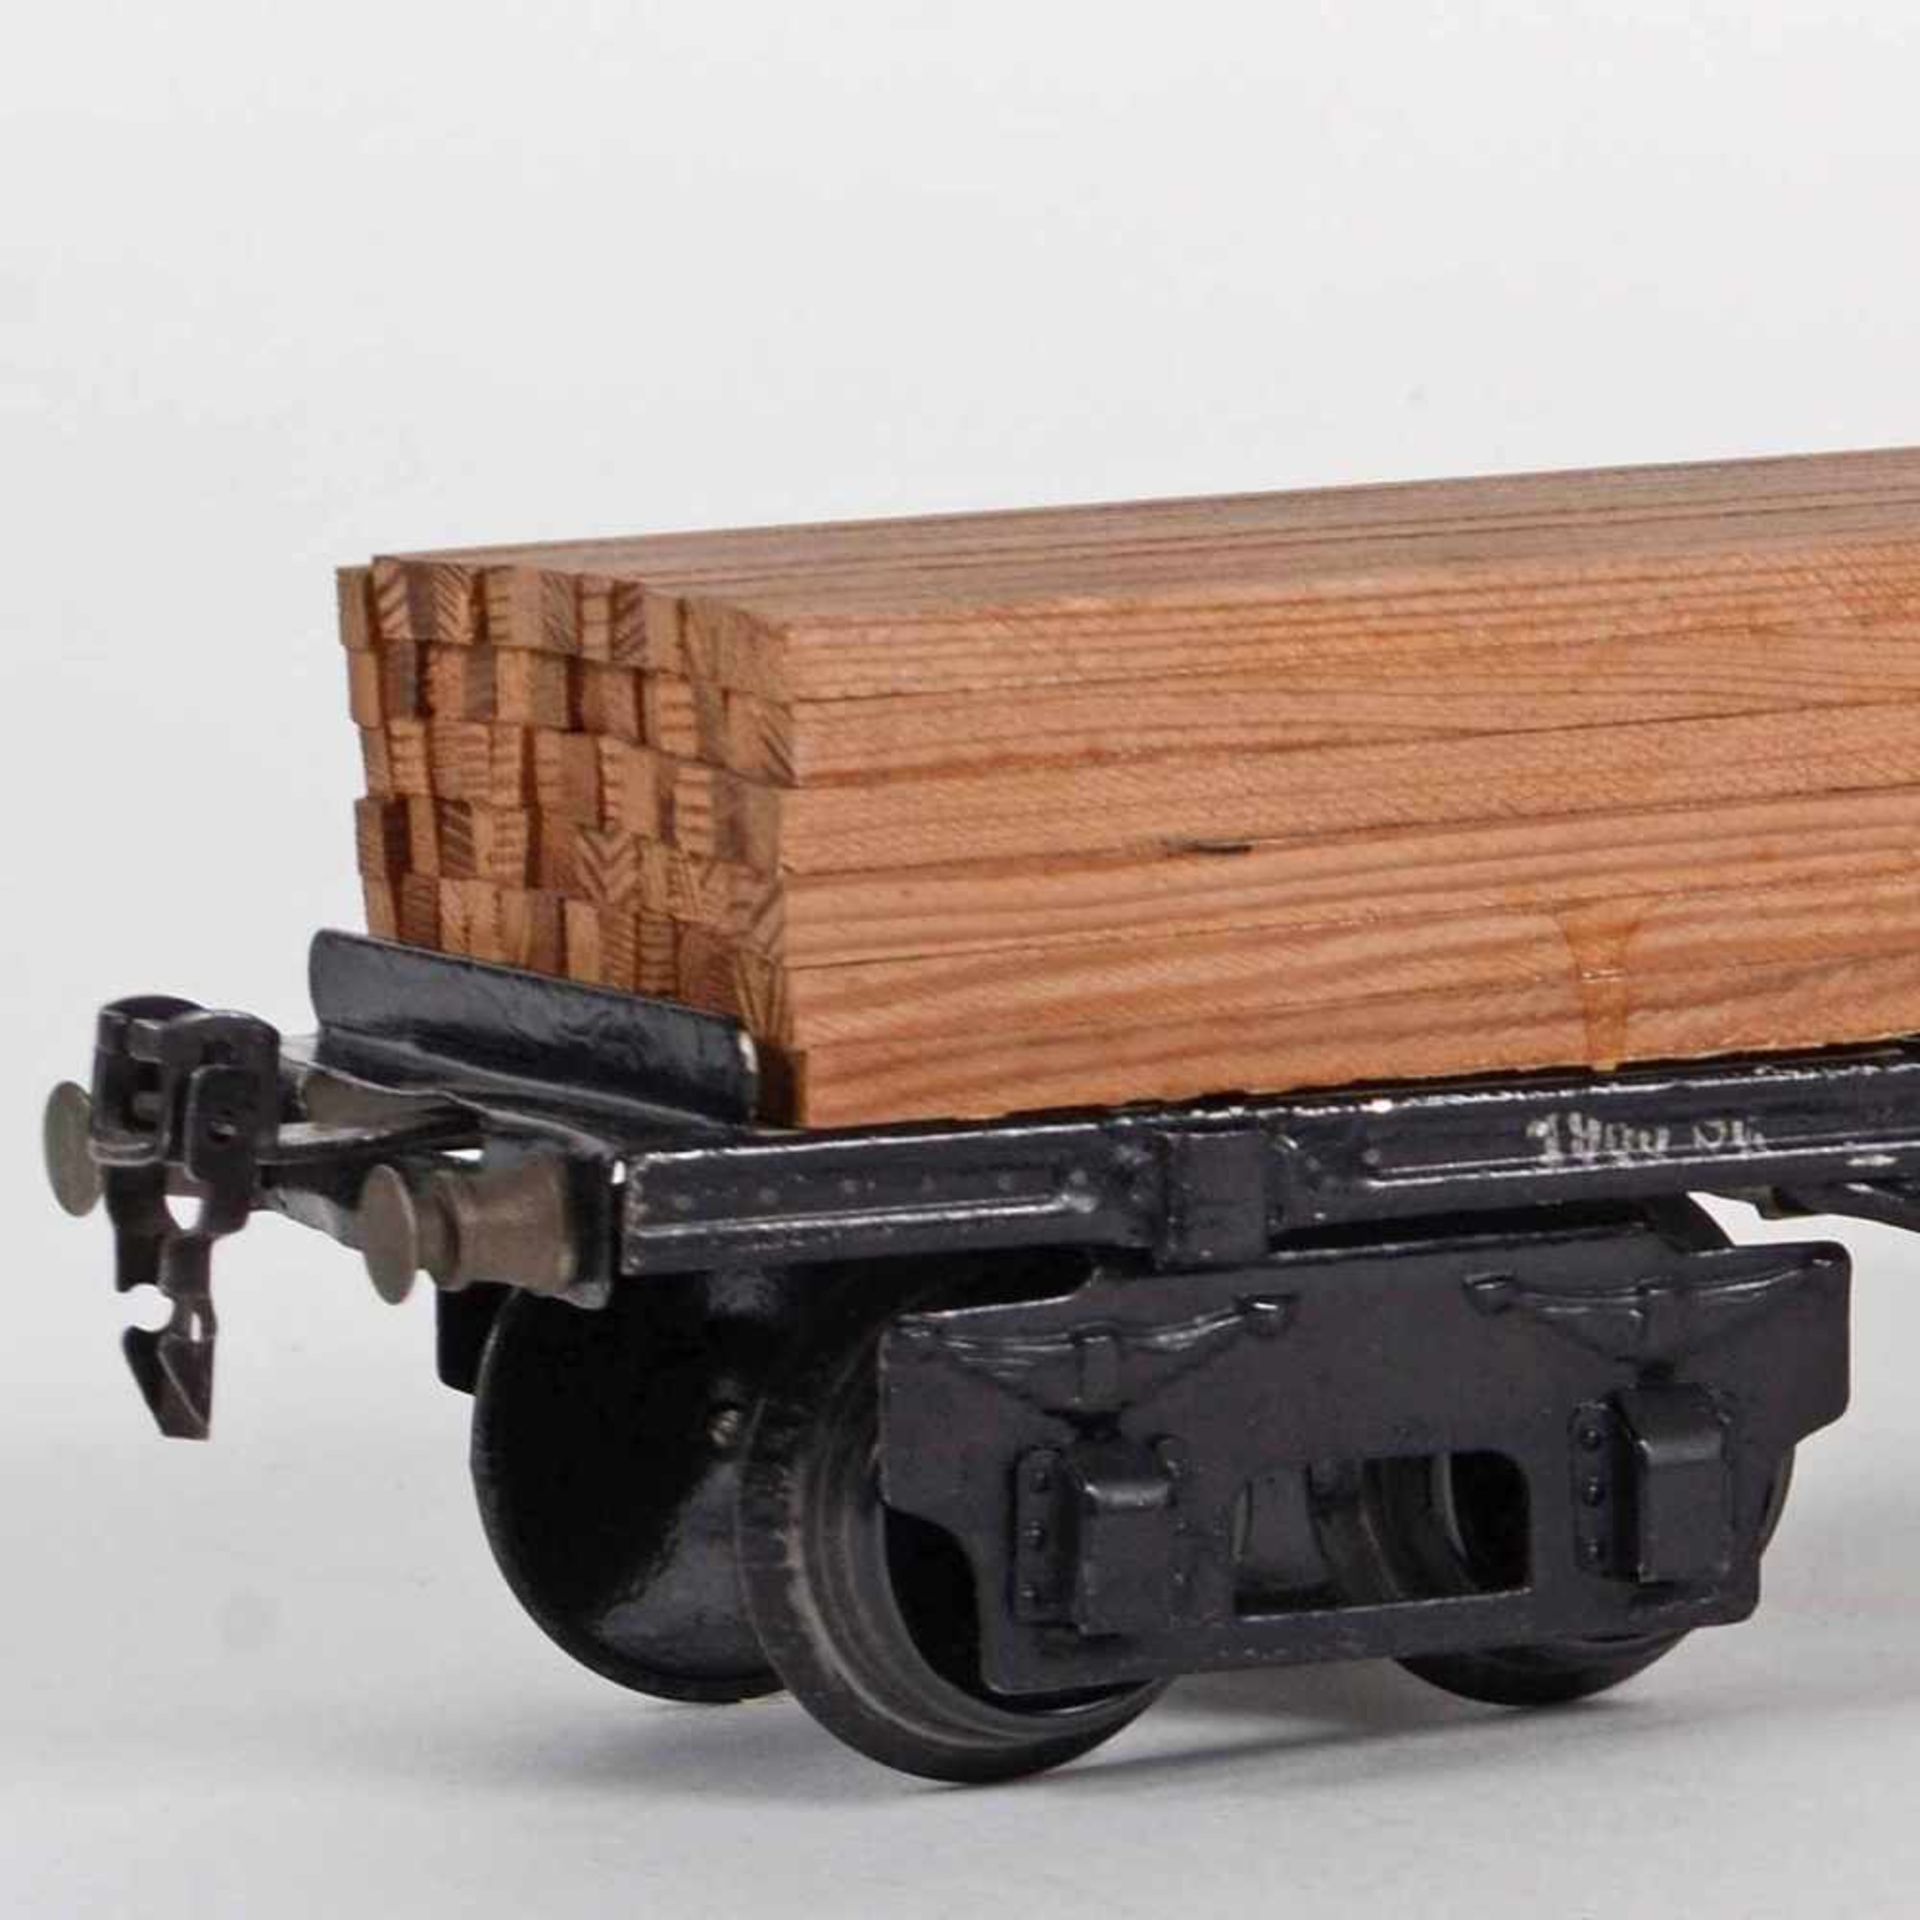 Güterwagen Hersteller: Märklin, Spur 1, Doppelachser mit Langholzladung, gute Erhaltung, L ca. 31,